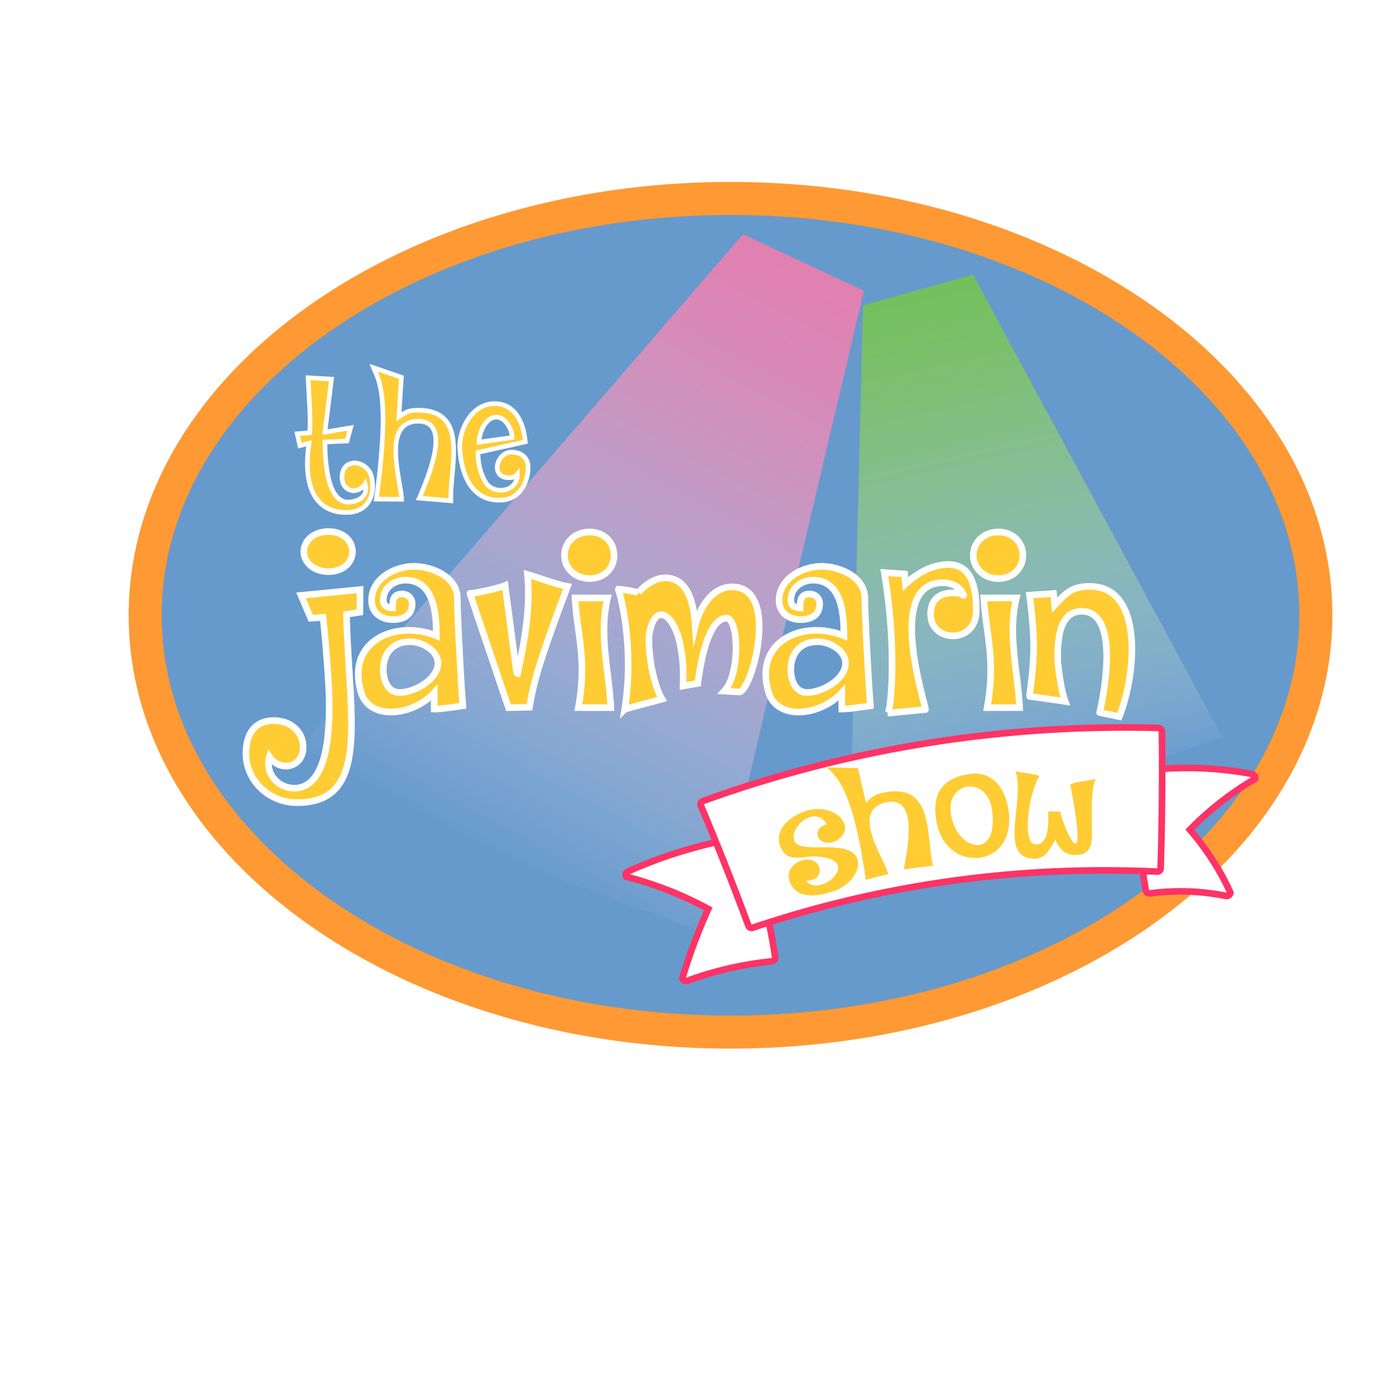 The Javi Marin Show